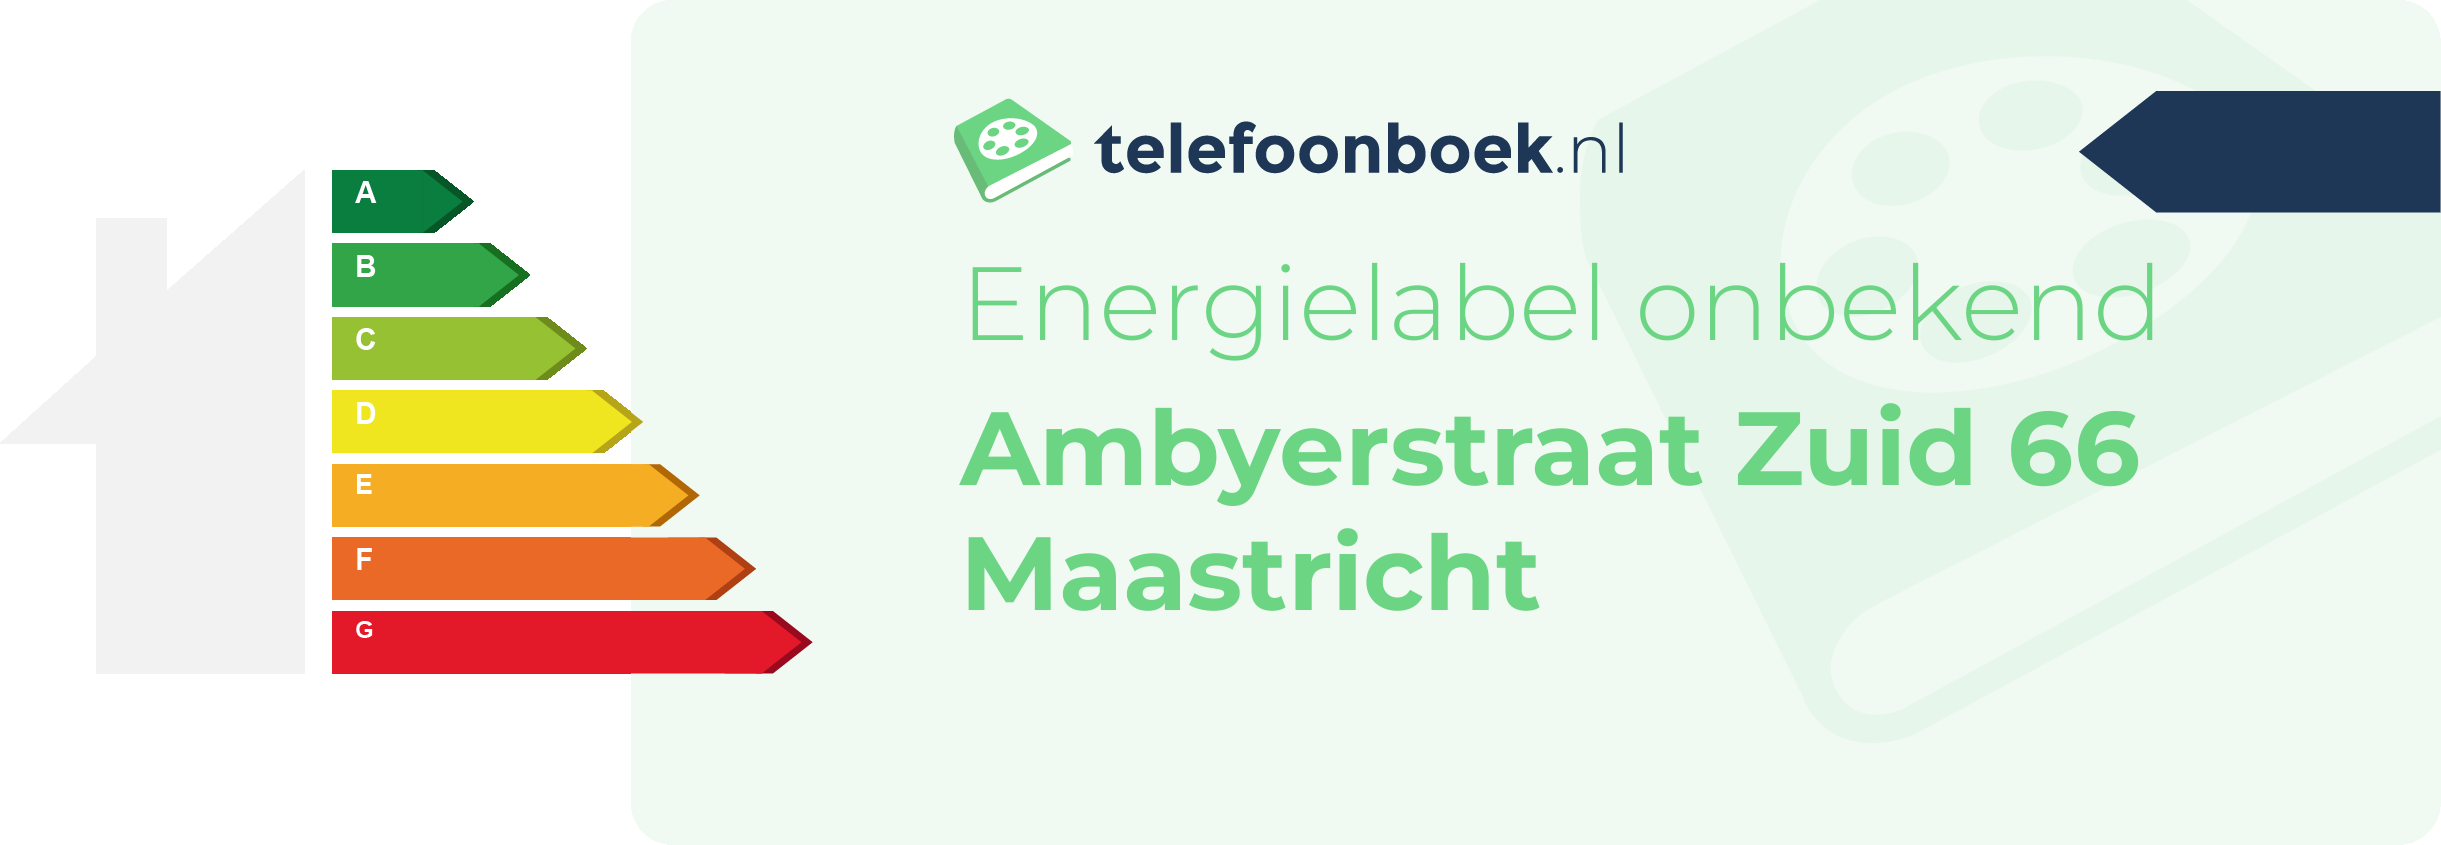 Energielabel Ambyerstraat Zuid 66 Maastricht